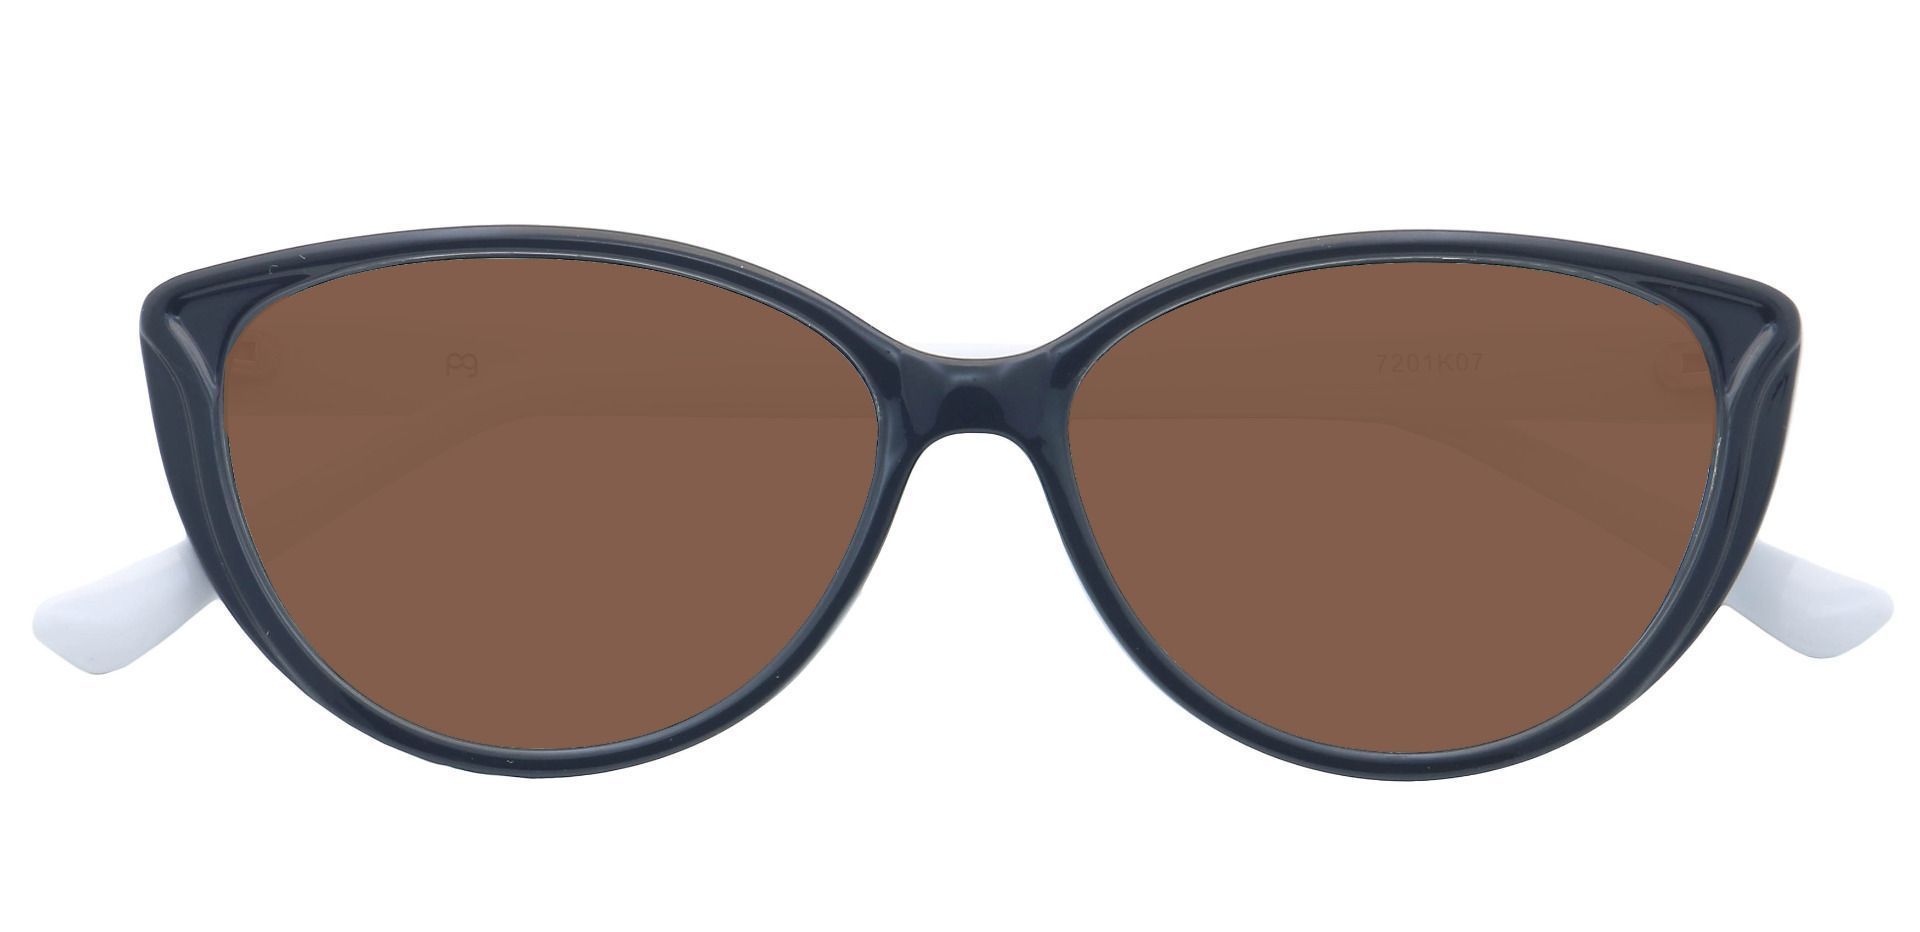 Amore Cat-Eye Prescription Sunglasses - Black Frame With Brown Lenses